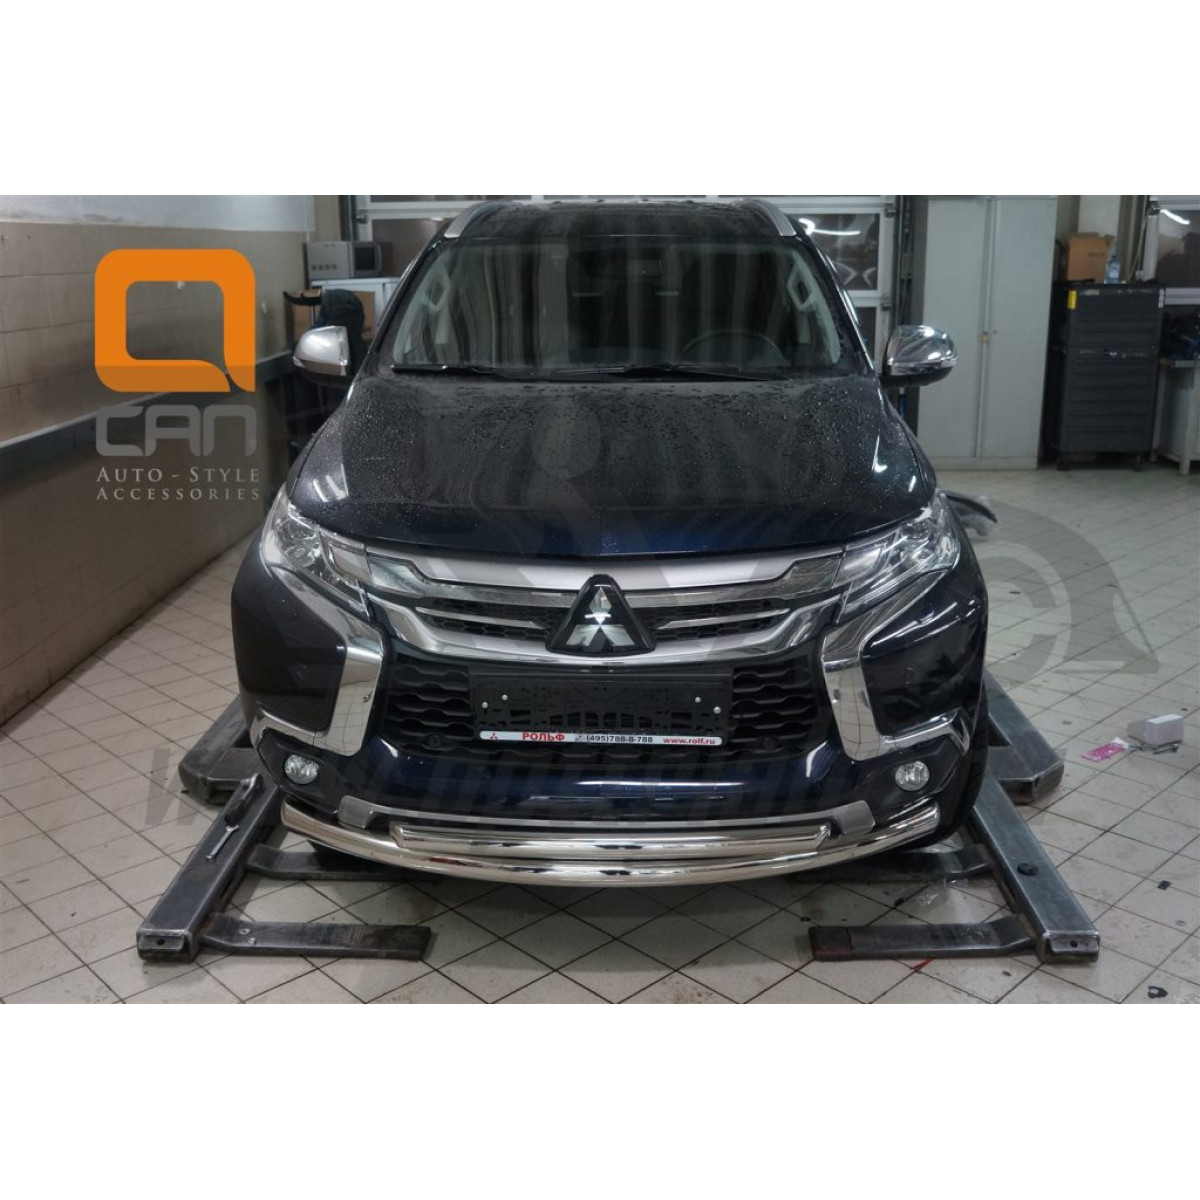 Защита переднего бампера Mitsubishi Pajero Sport 2017-2018